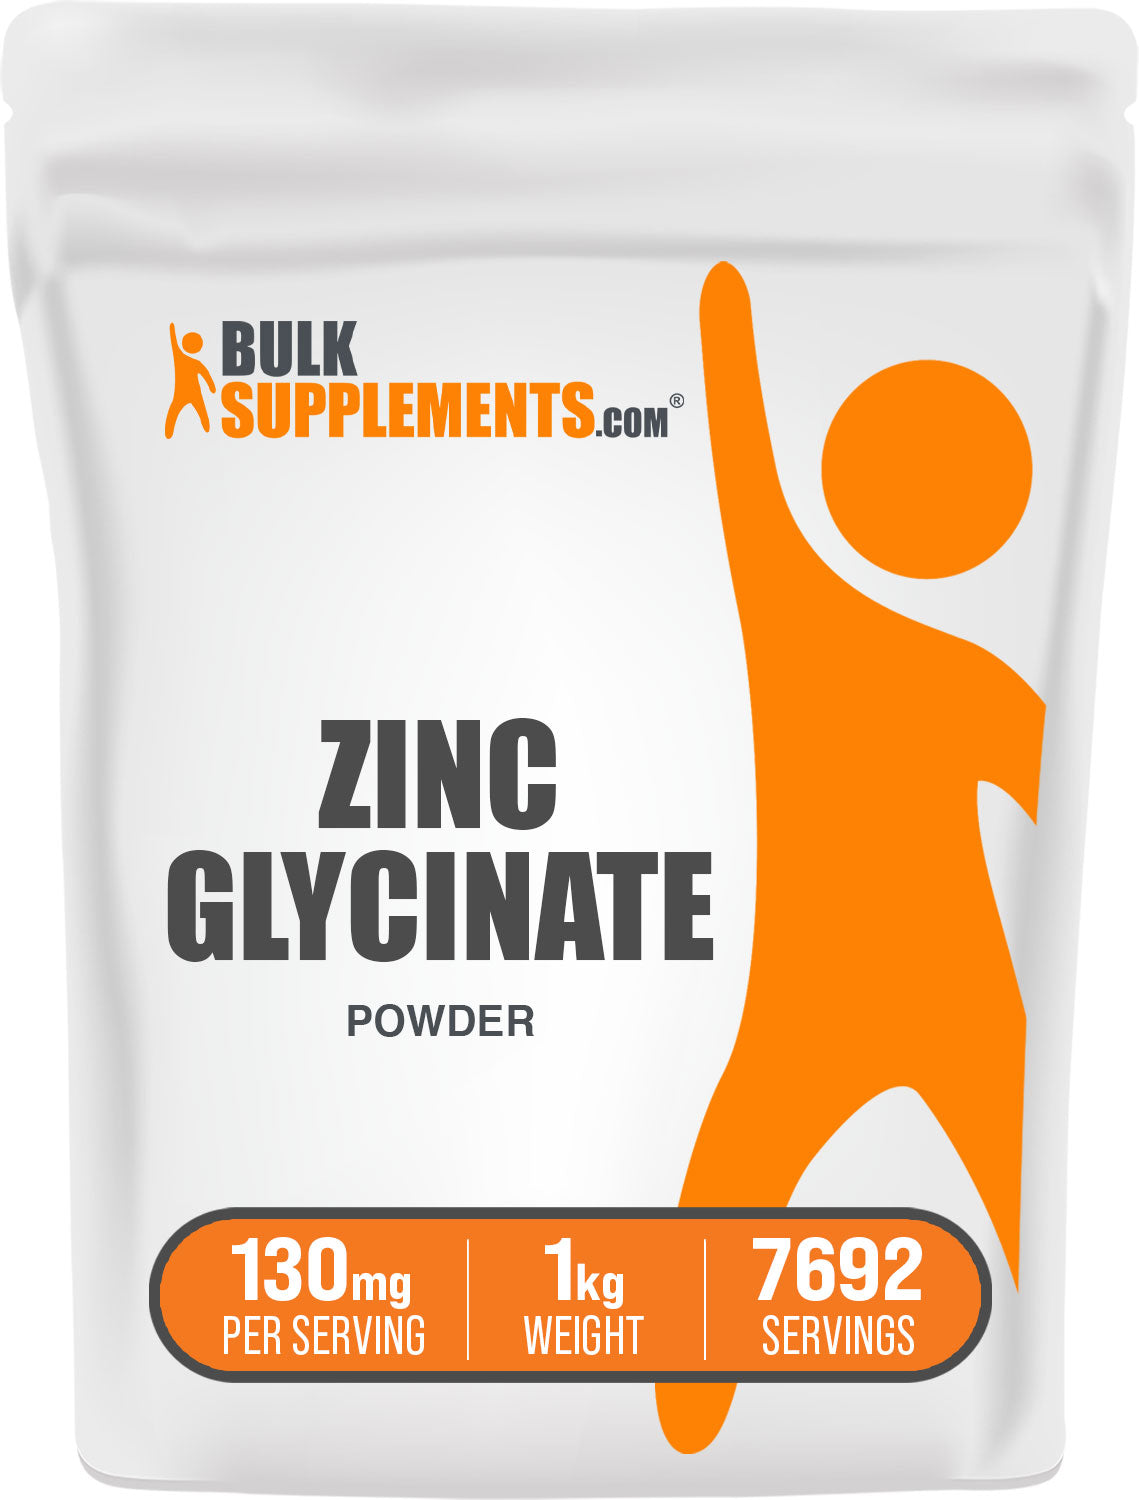 Zinc Glycinate 1kg Bag